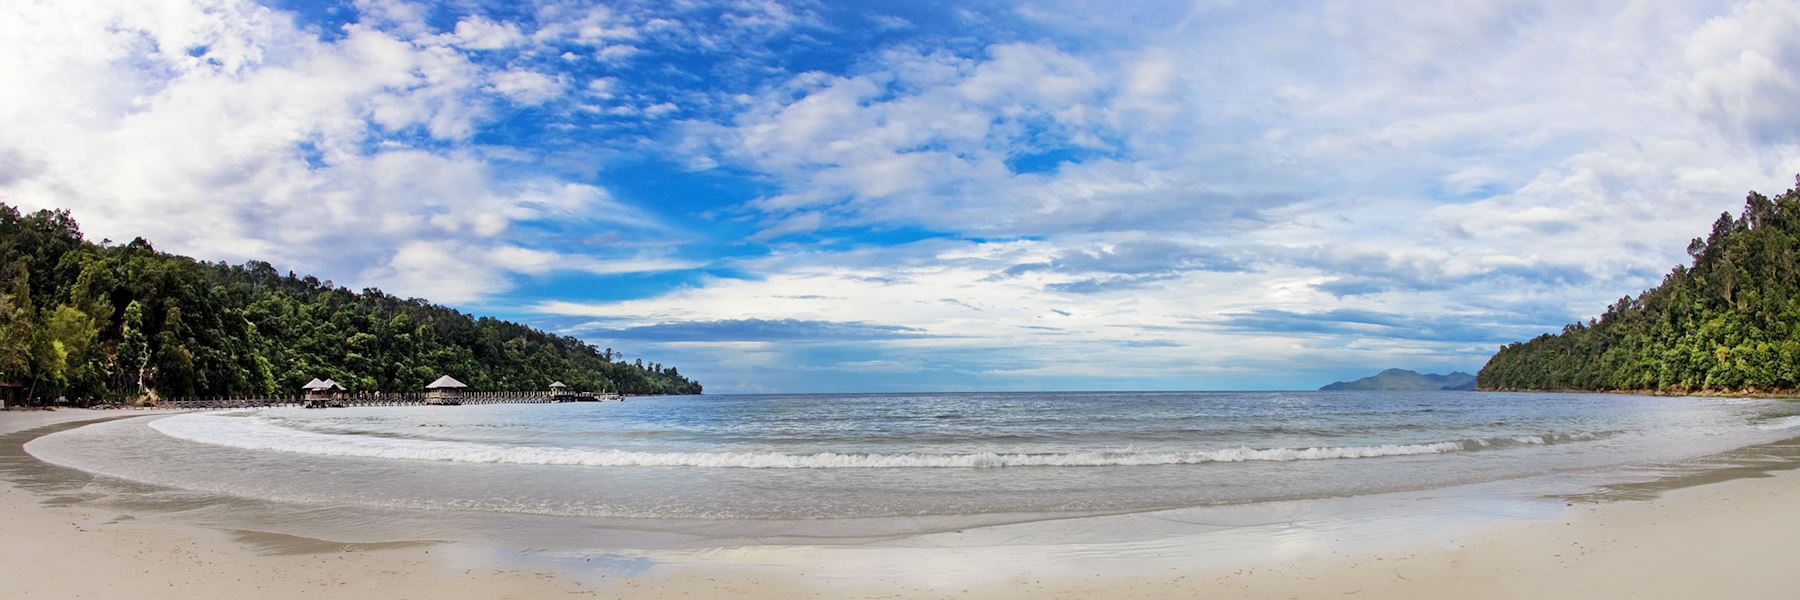 Visit Gaya Island on a trip to Borneo | Audley Travel